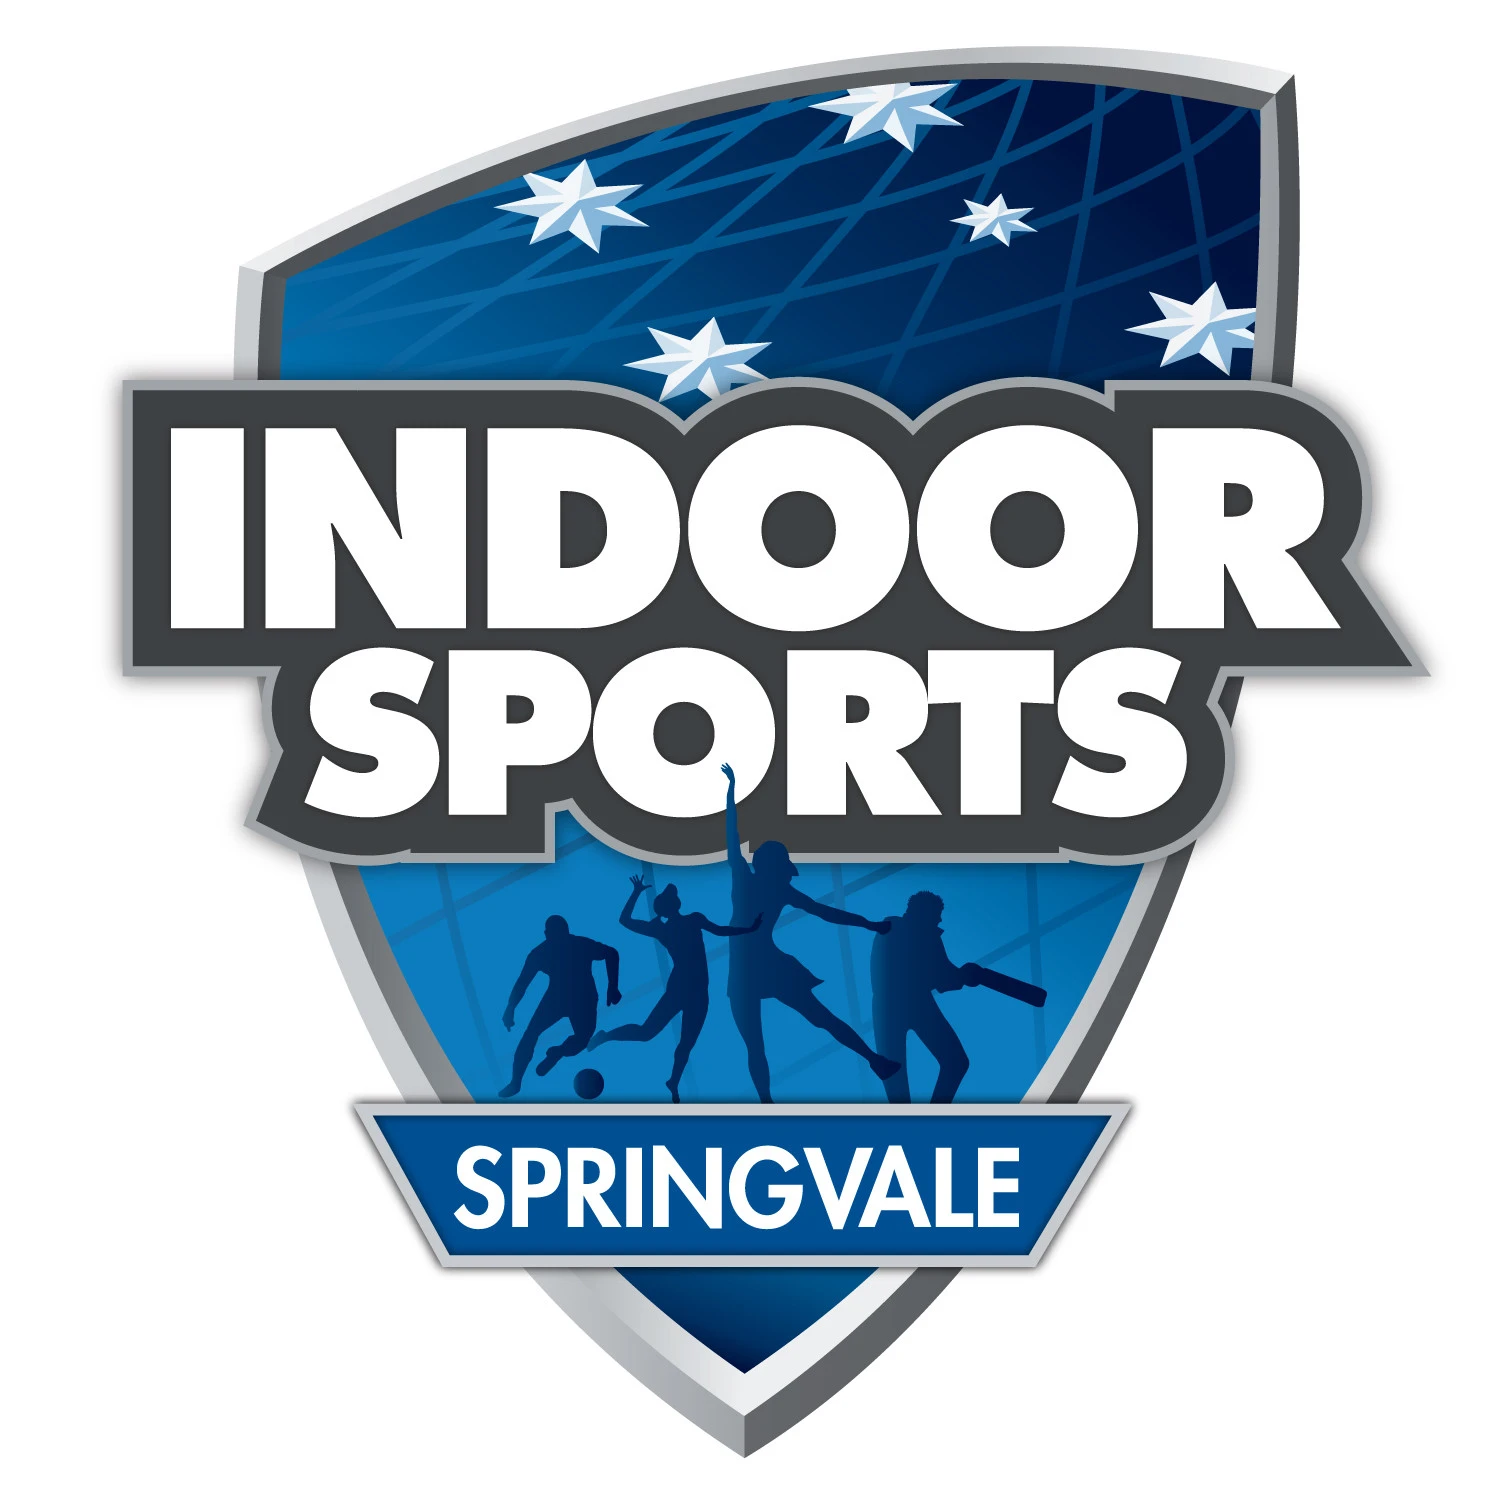 Springvale Indoor Sports